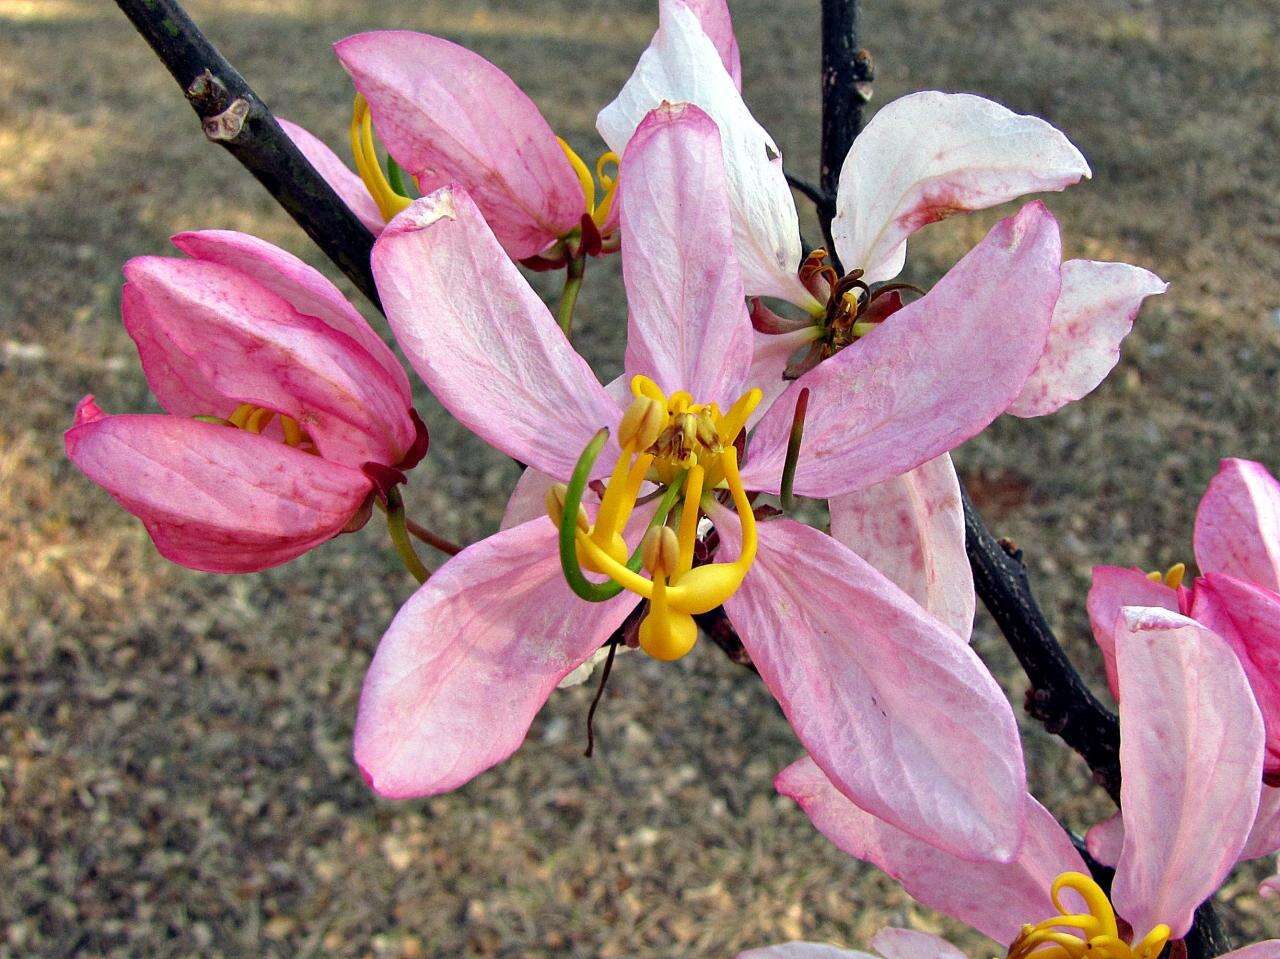 Image of apple blossom